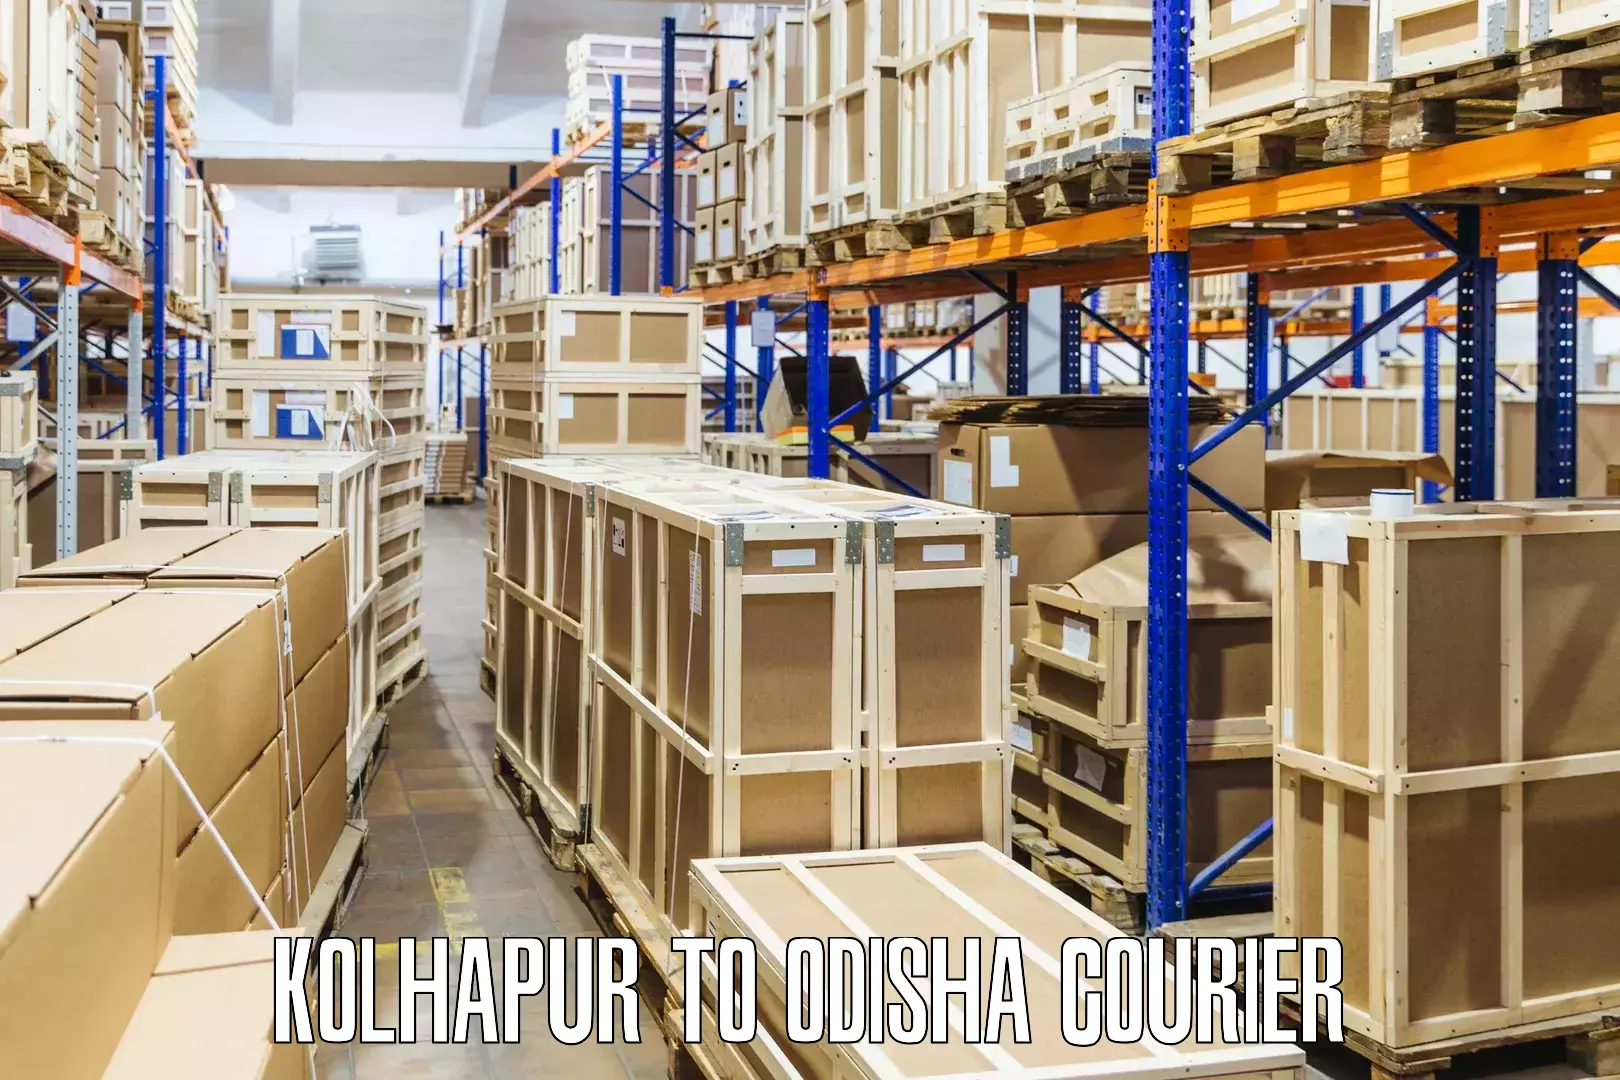 Nationwide delivery network Kolhapur to Khaprakhol